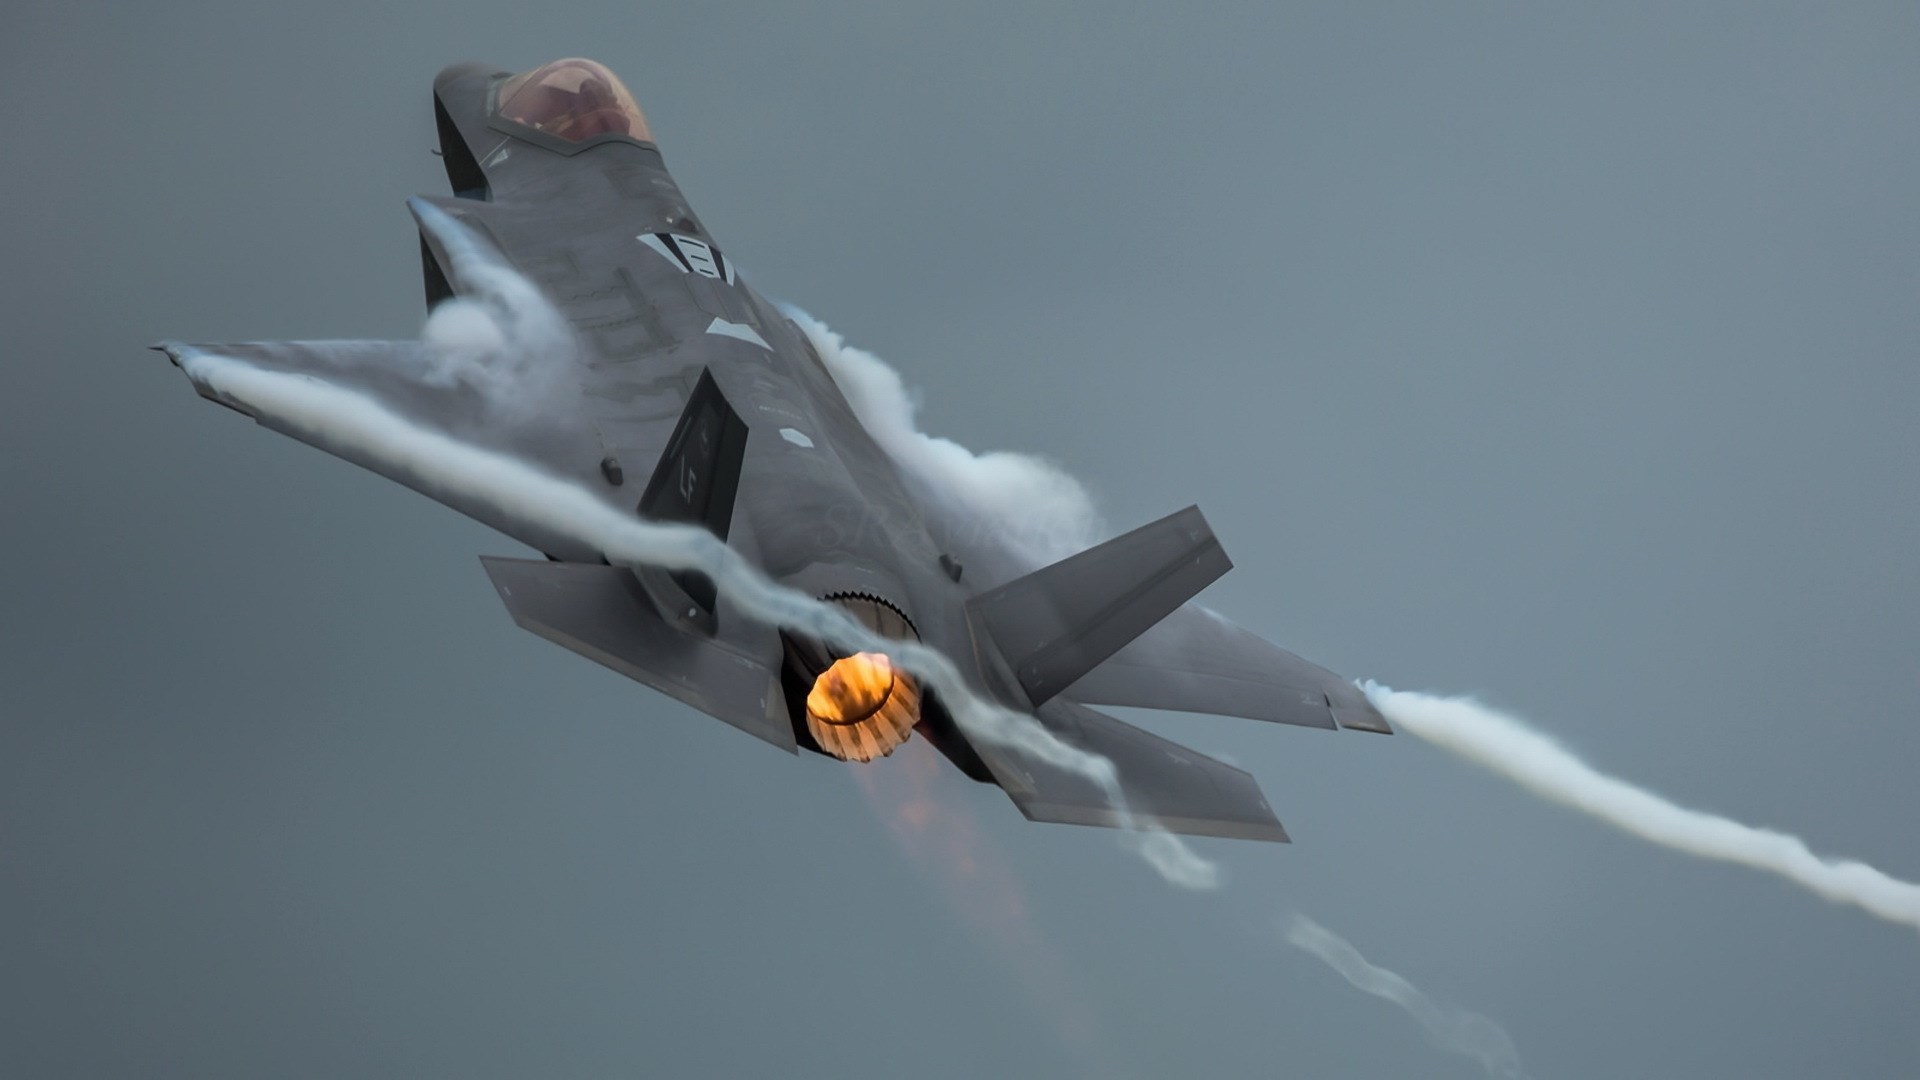 Lockheed Martin F-35 Lightning Ii Wallpapers